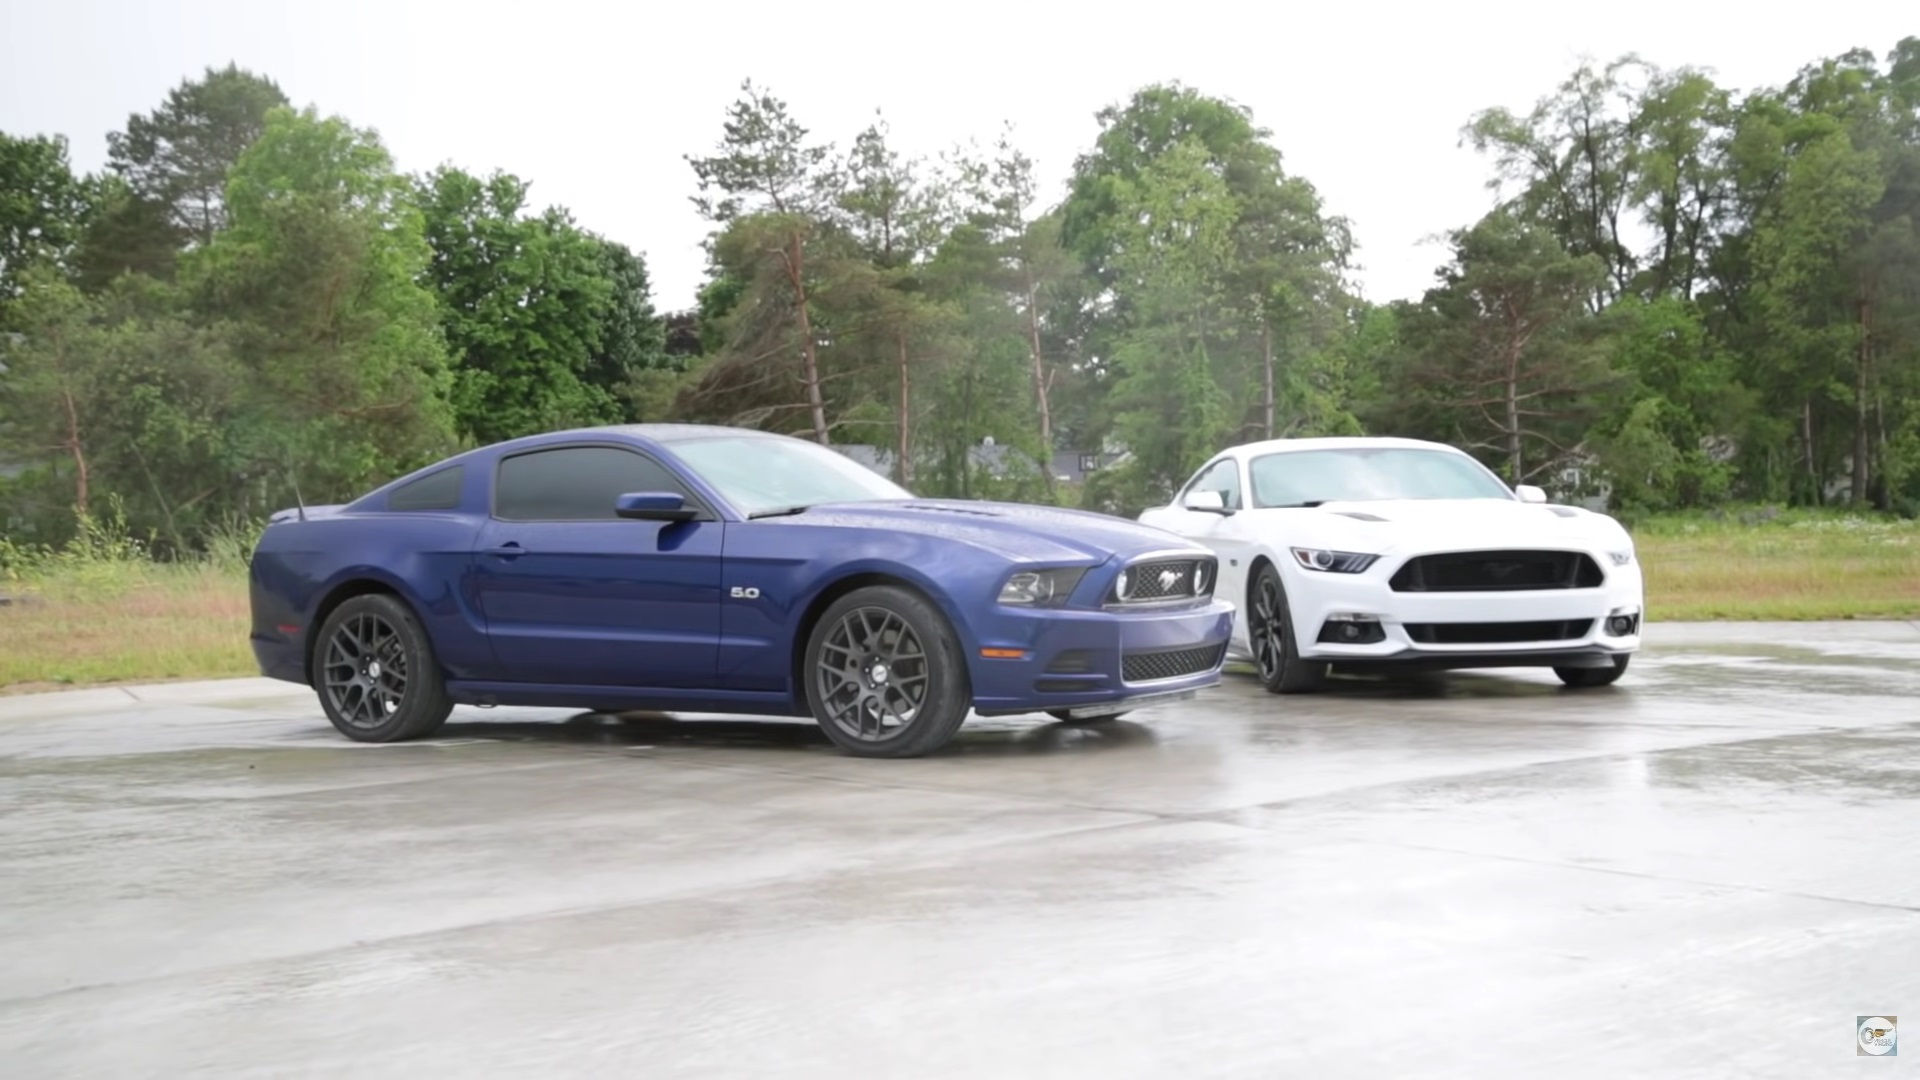 2014 Mustang GT vs 2016 Mustang GT: Head-To-Head Comparison